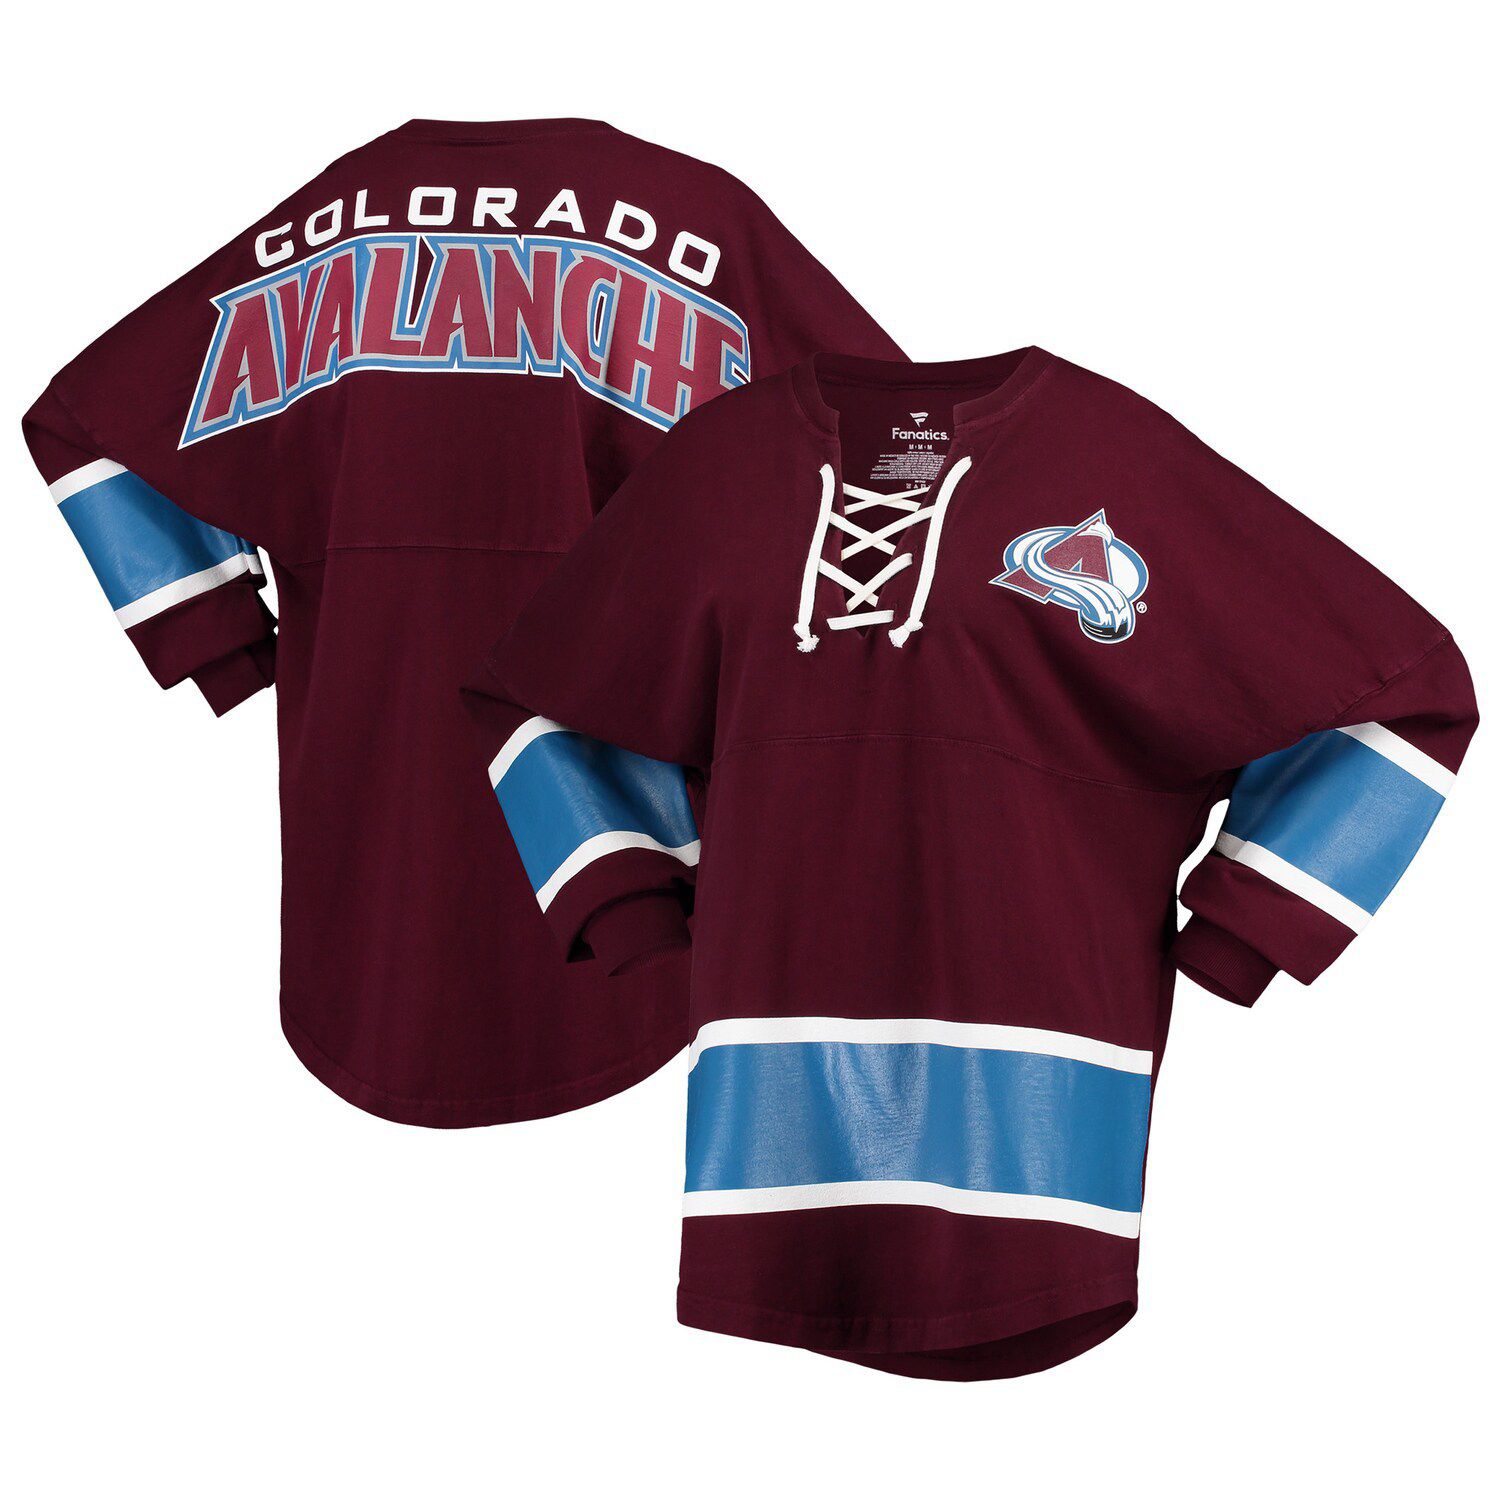 Avalanche women's jersey